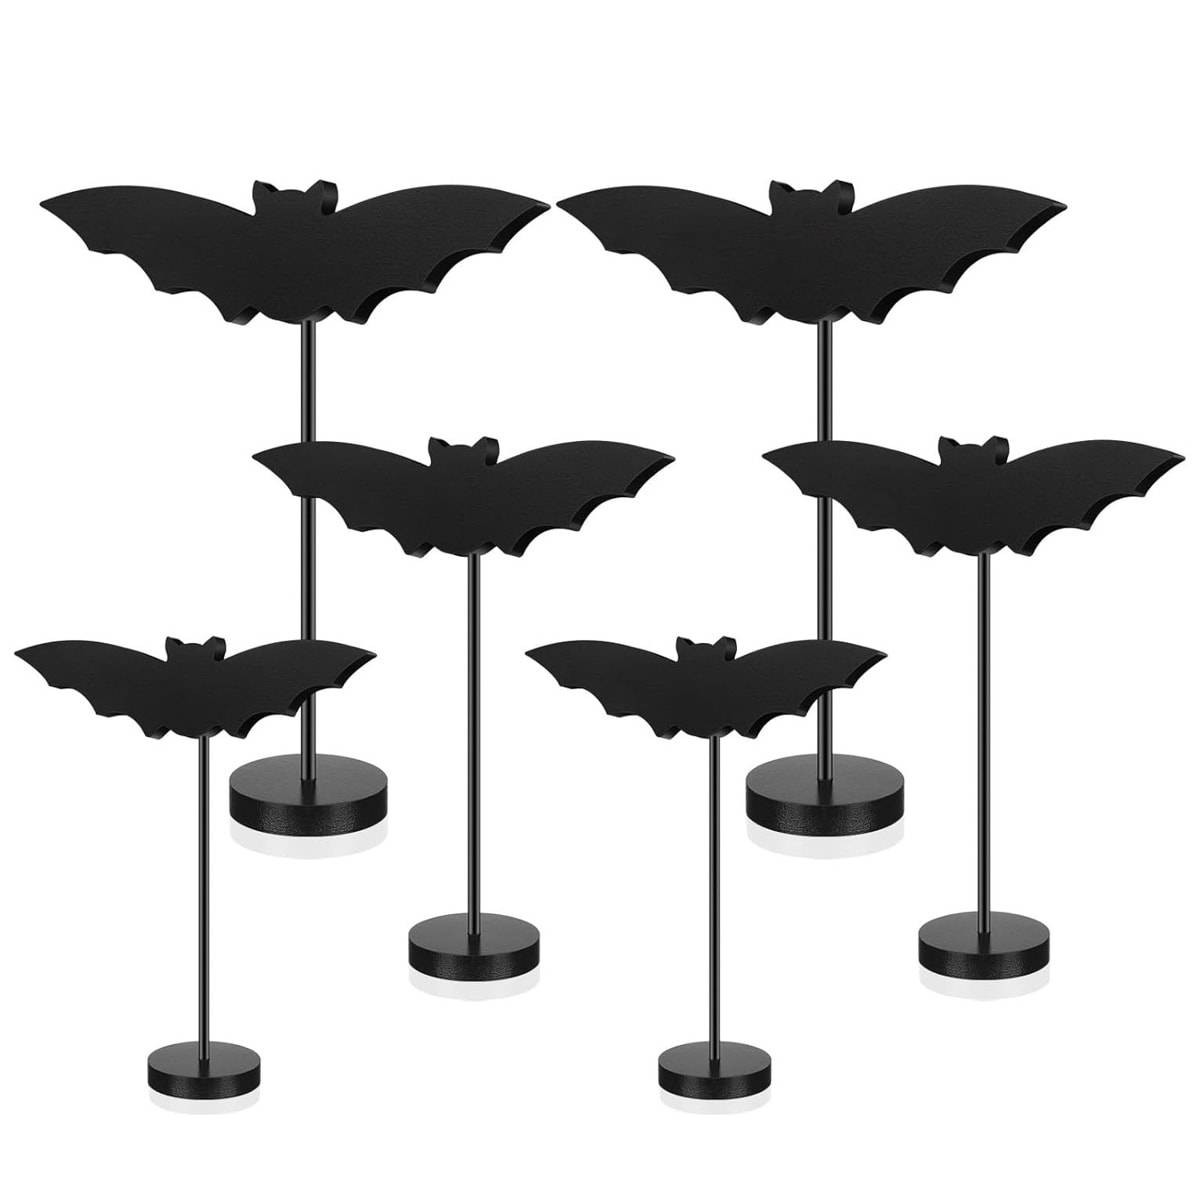 6 wooden bat centerpieces.